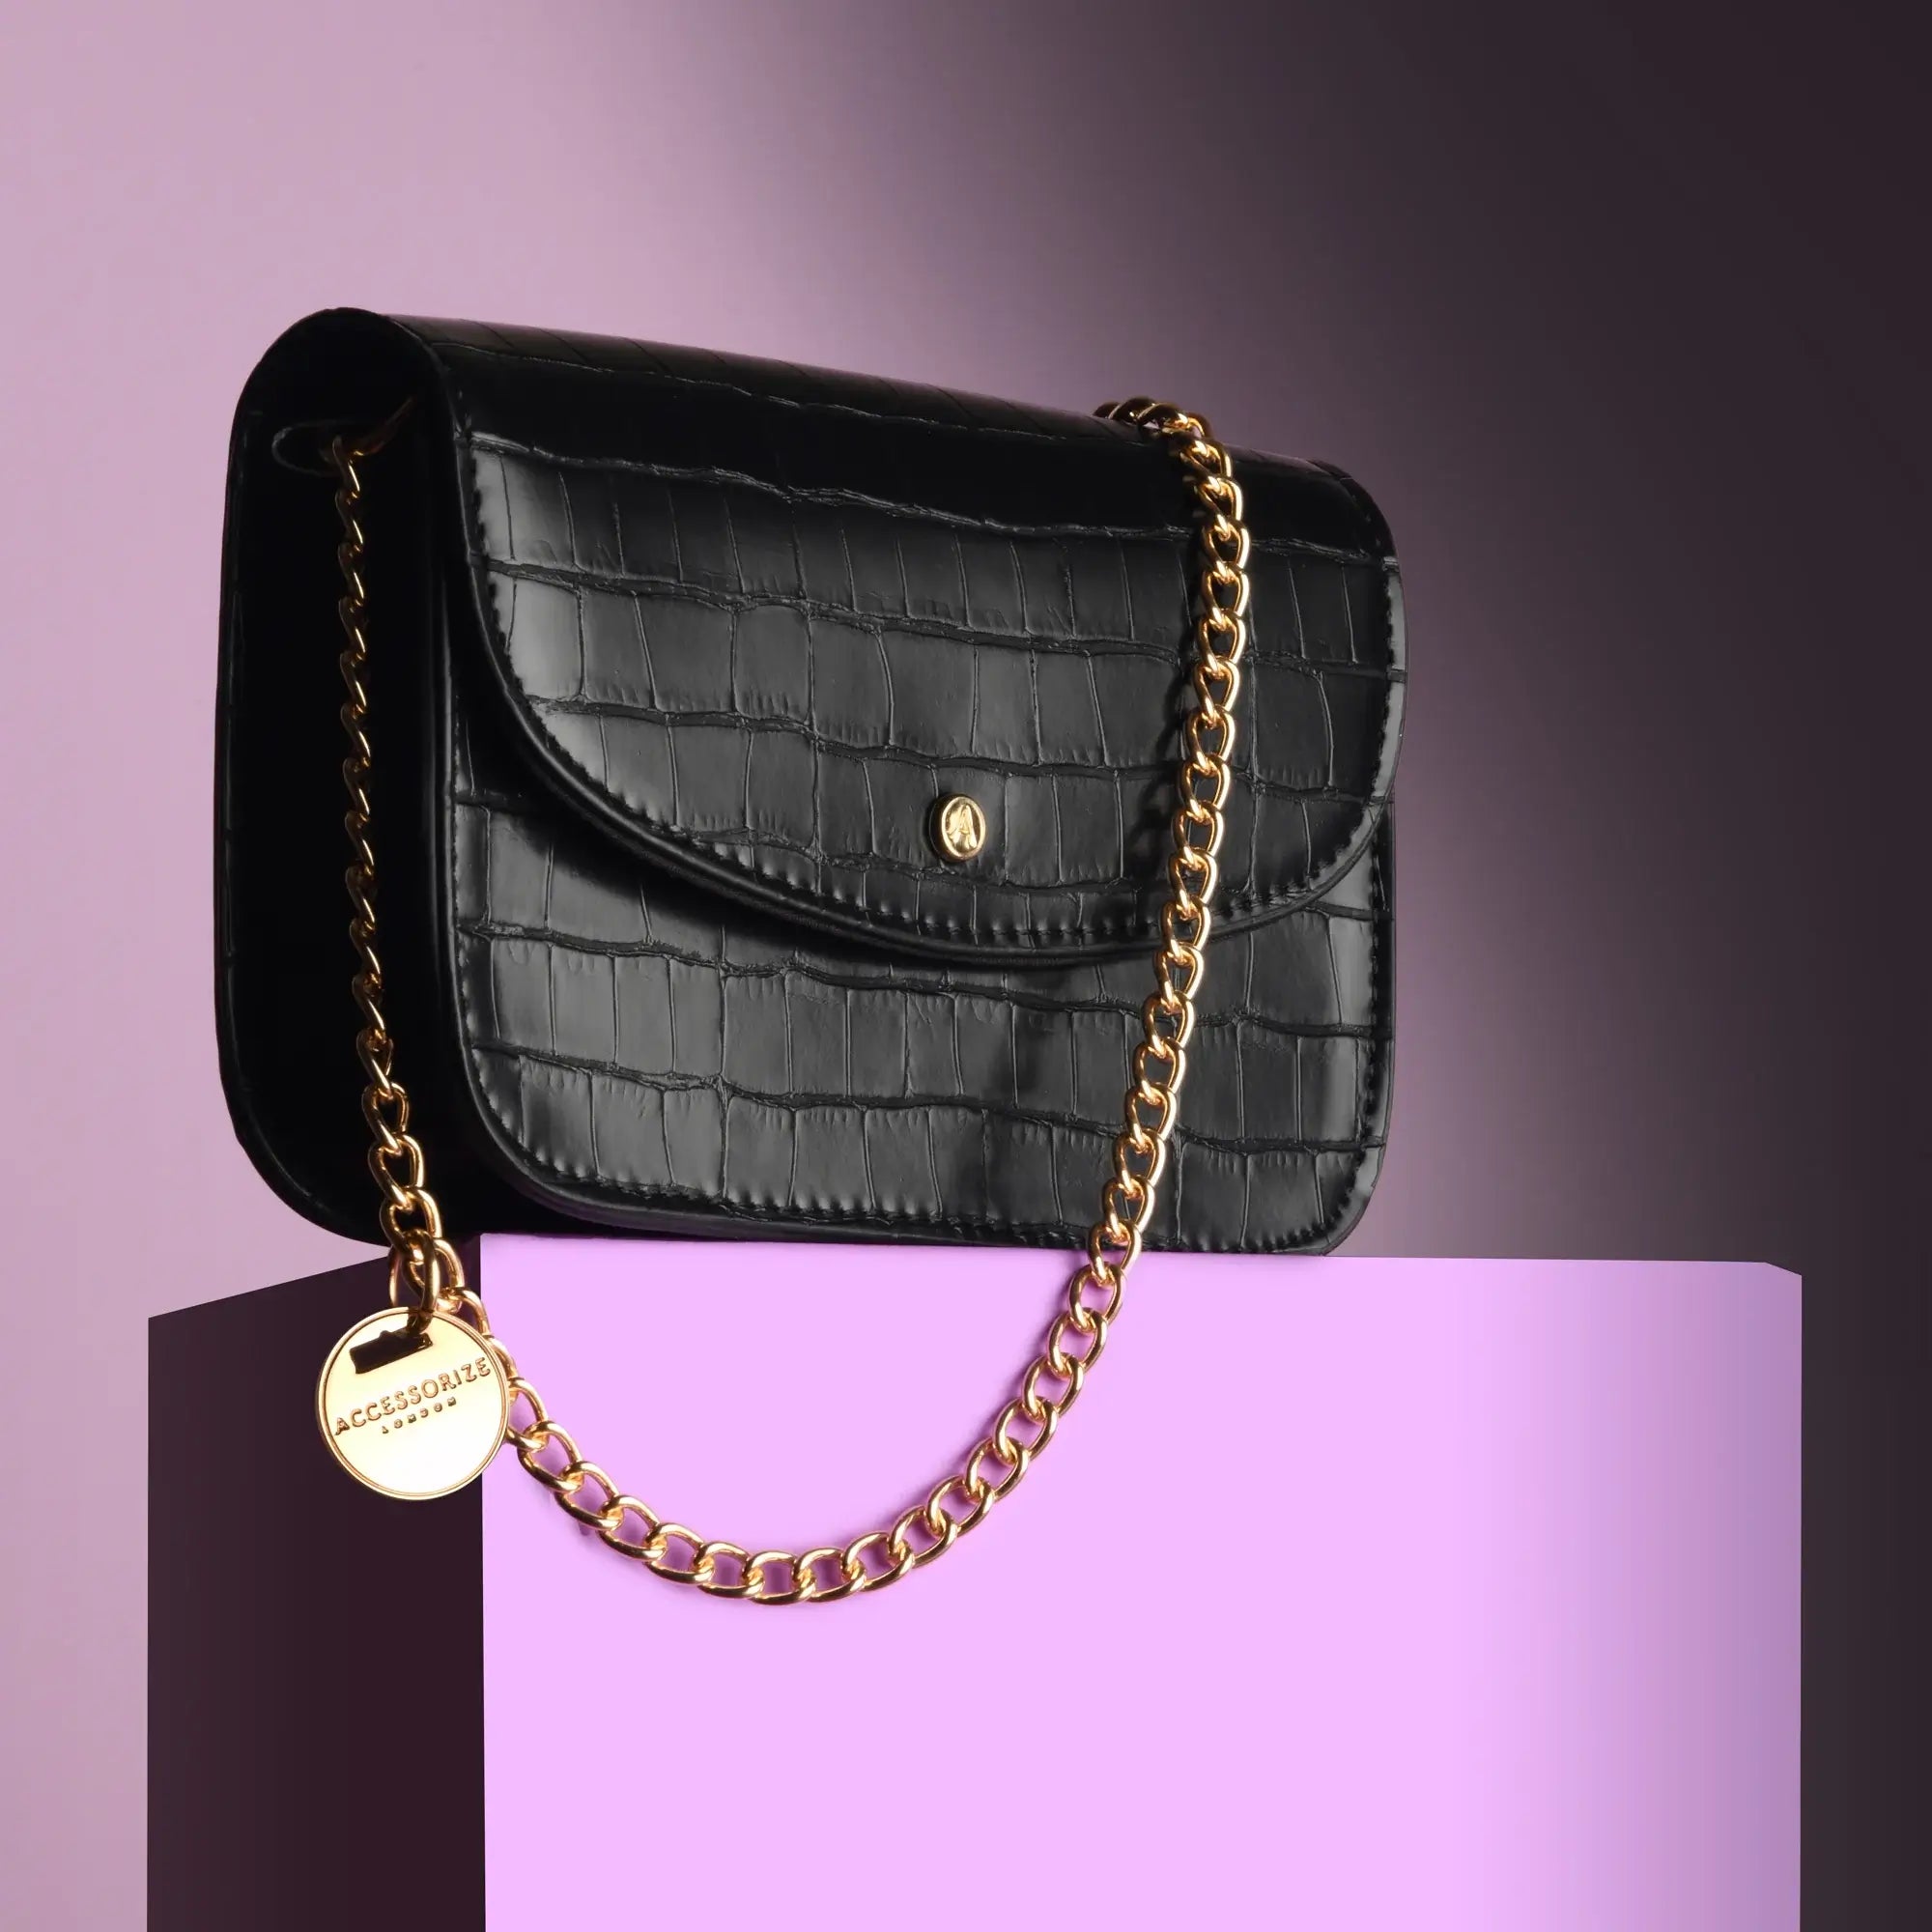 Malina Handmade Victorian Style Lace Handbag Purse Clutch Pink Blue | eBay